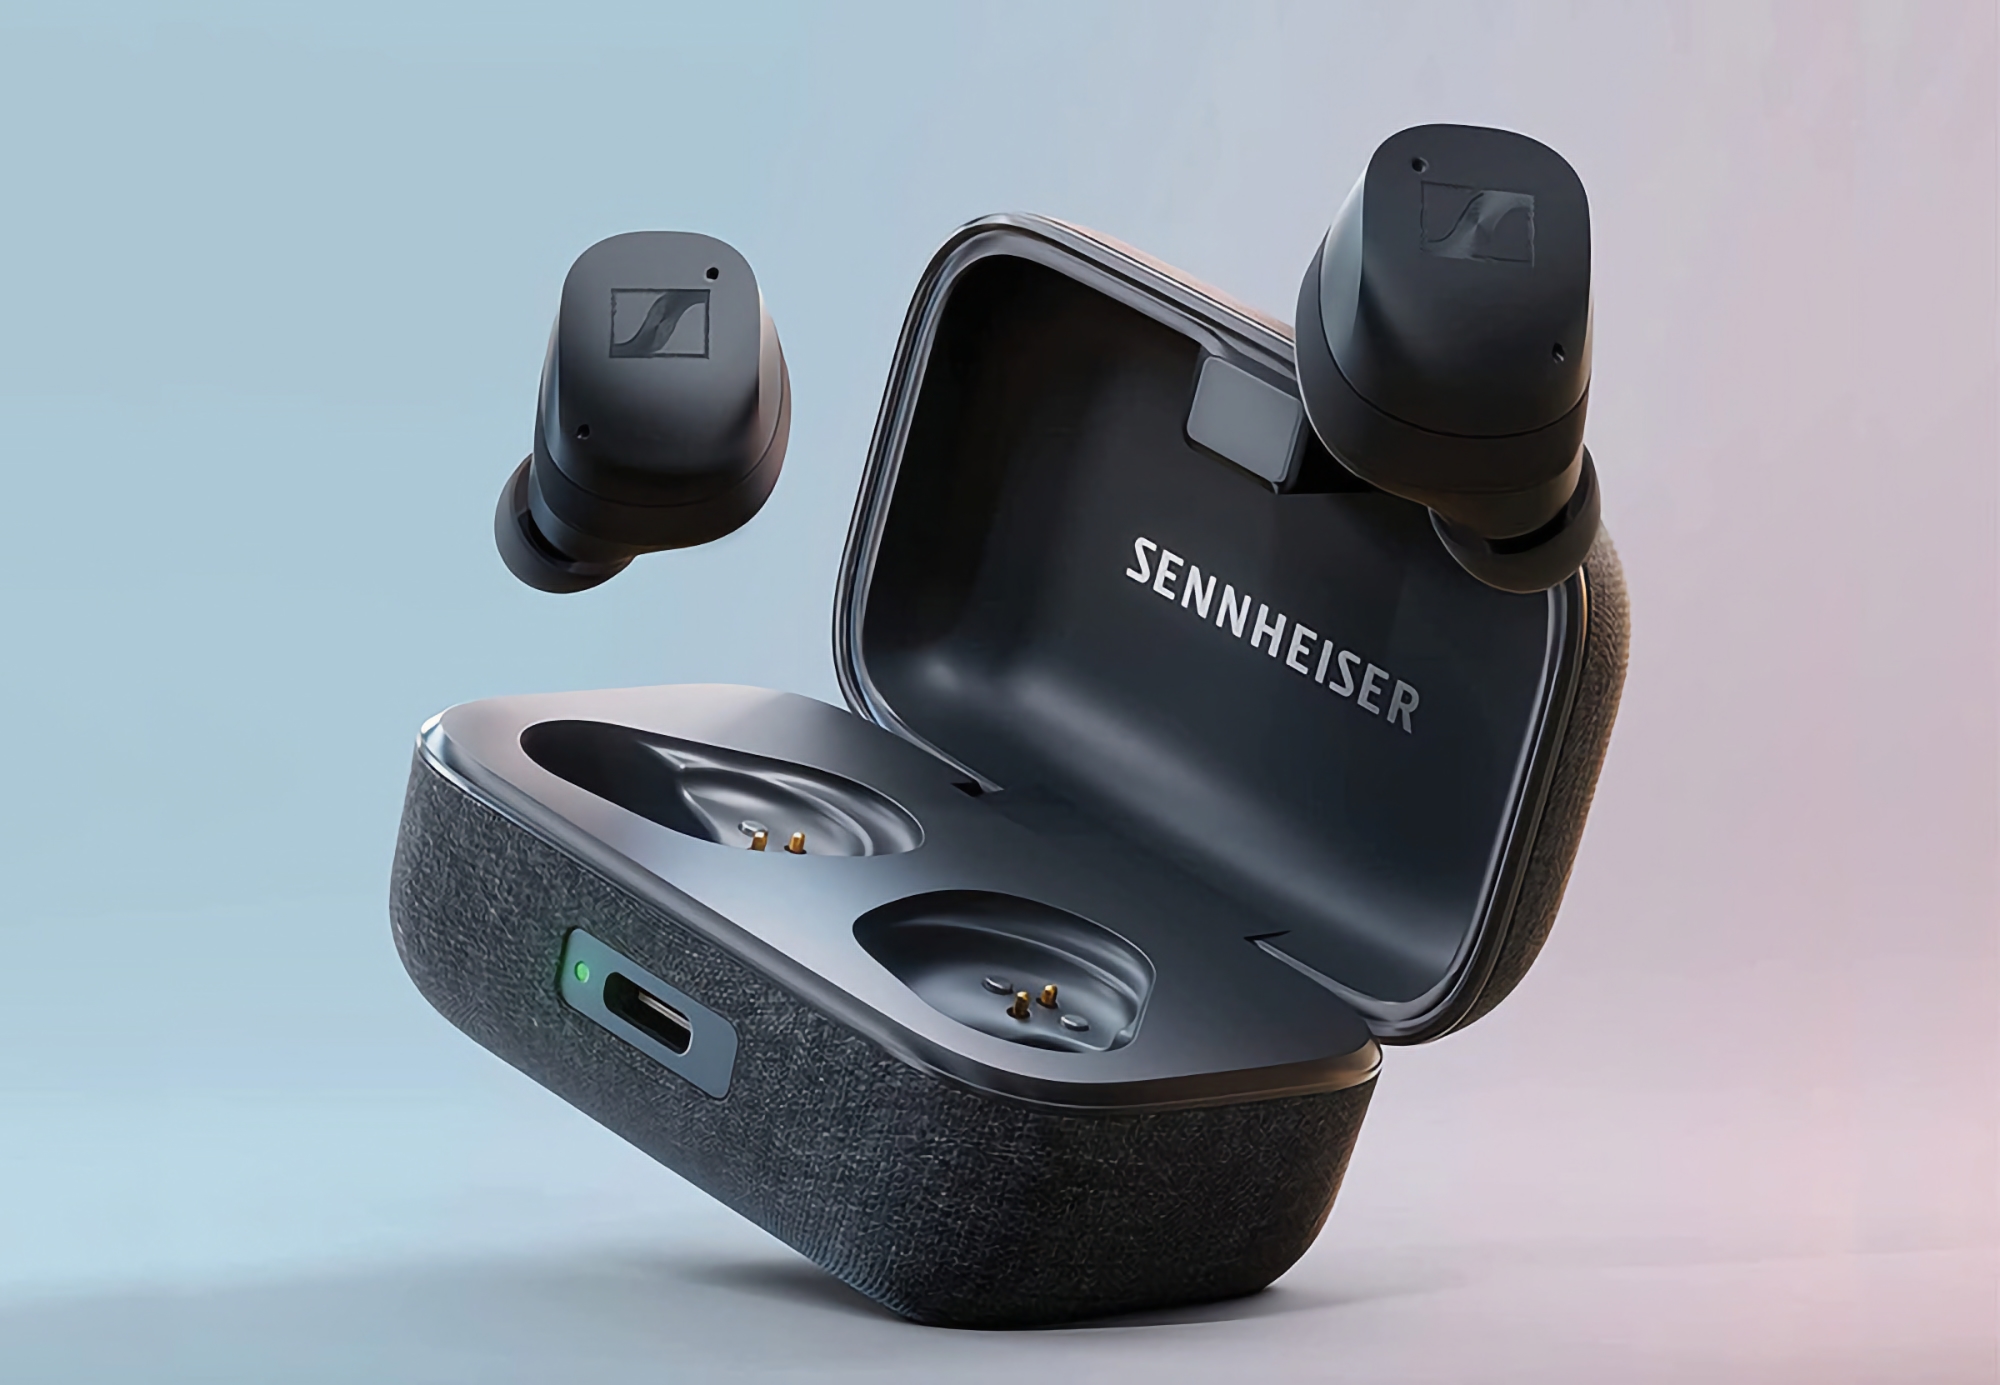 Sennheiser MOMENTUM True Wireless 3 is available for $169 ($110